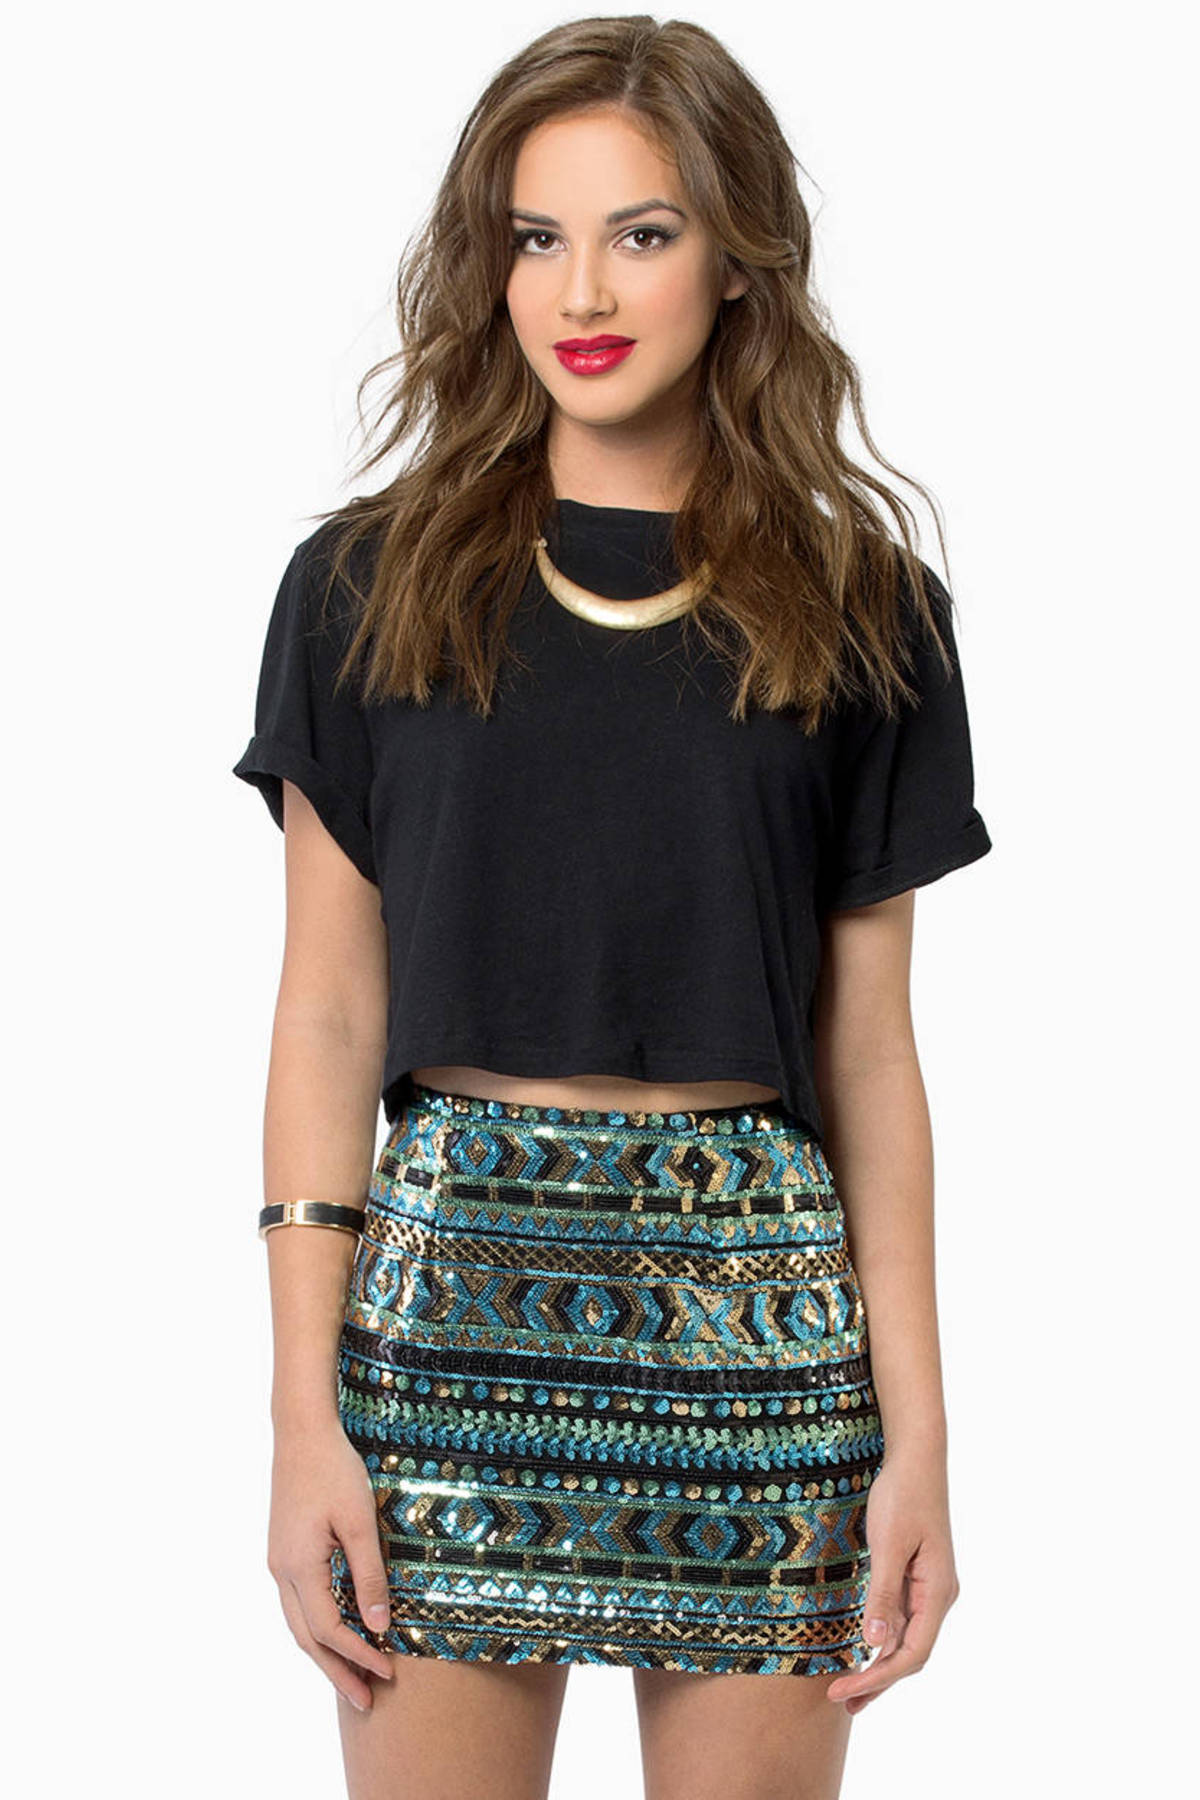 Shining Moon Skirt in Turquoise - $64 | Tobi US